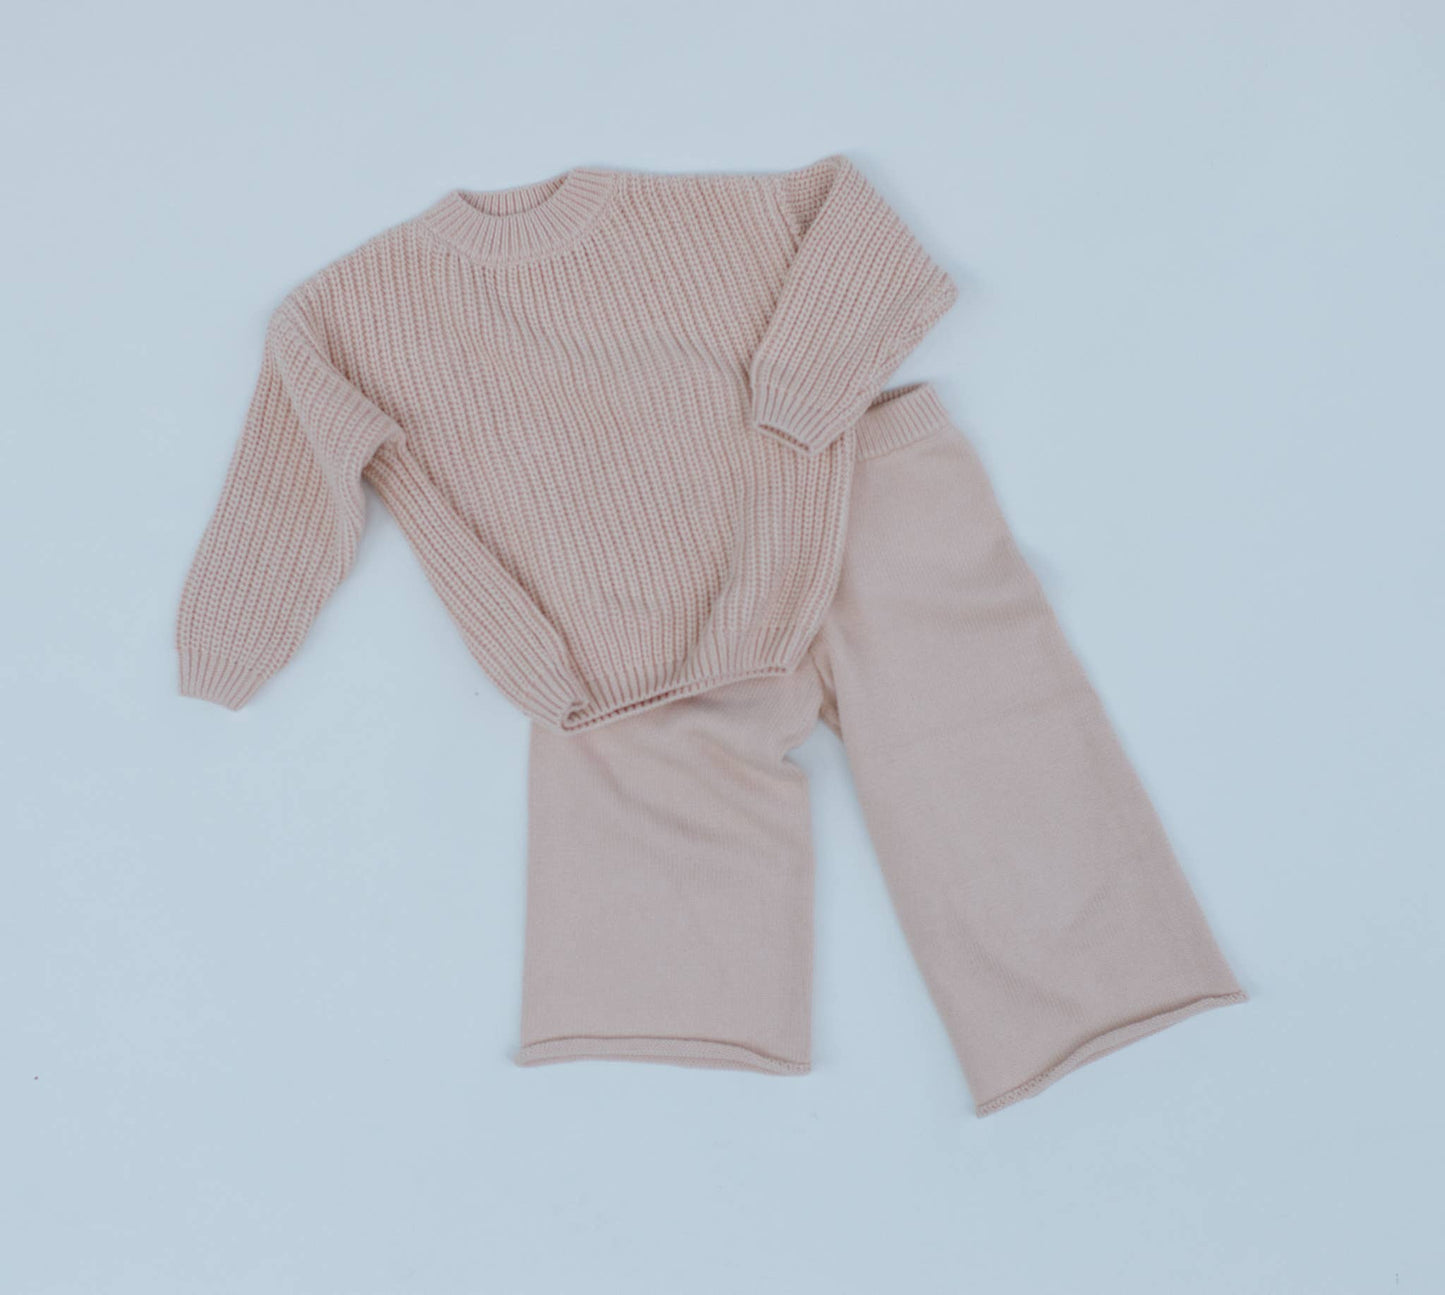 Bloom - Knit Set: Blush